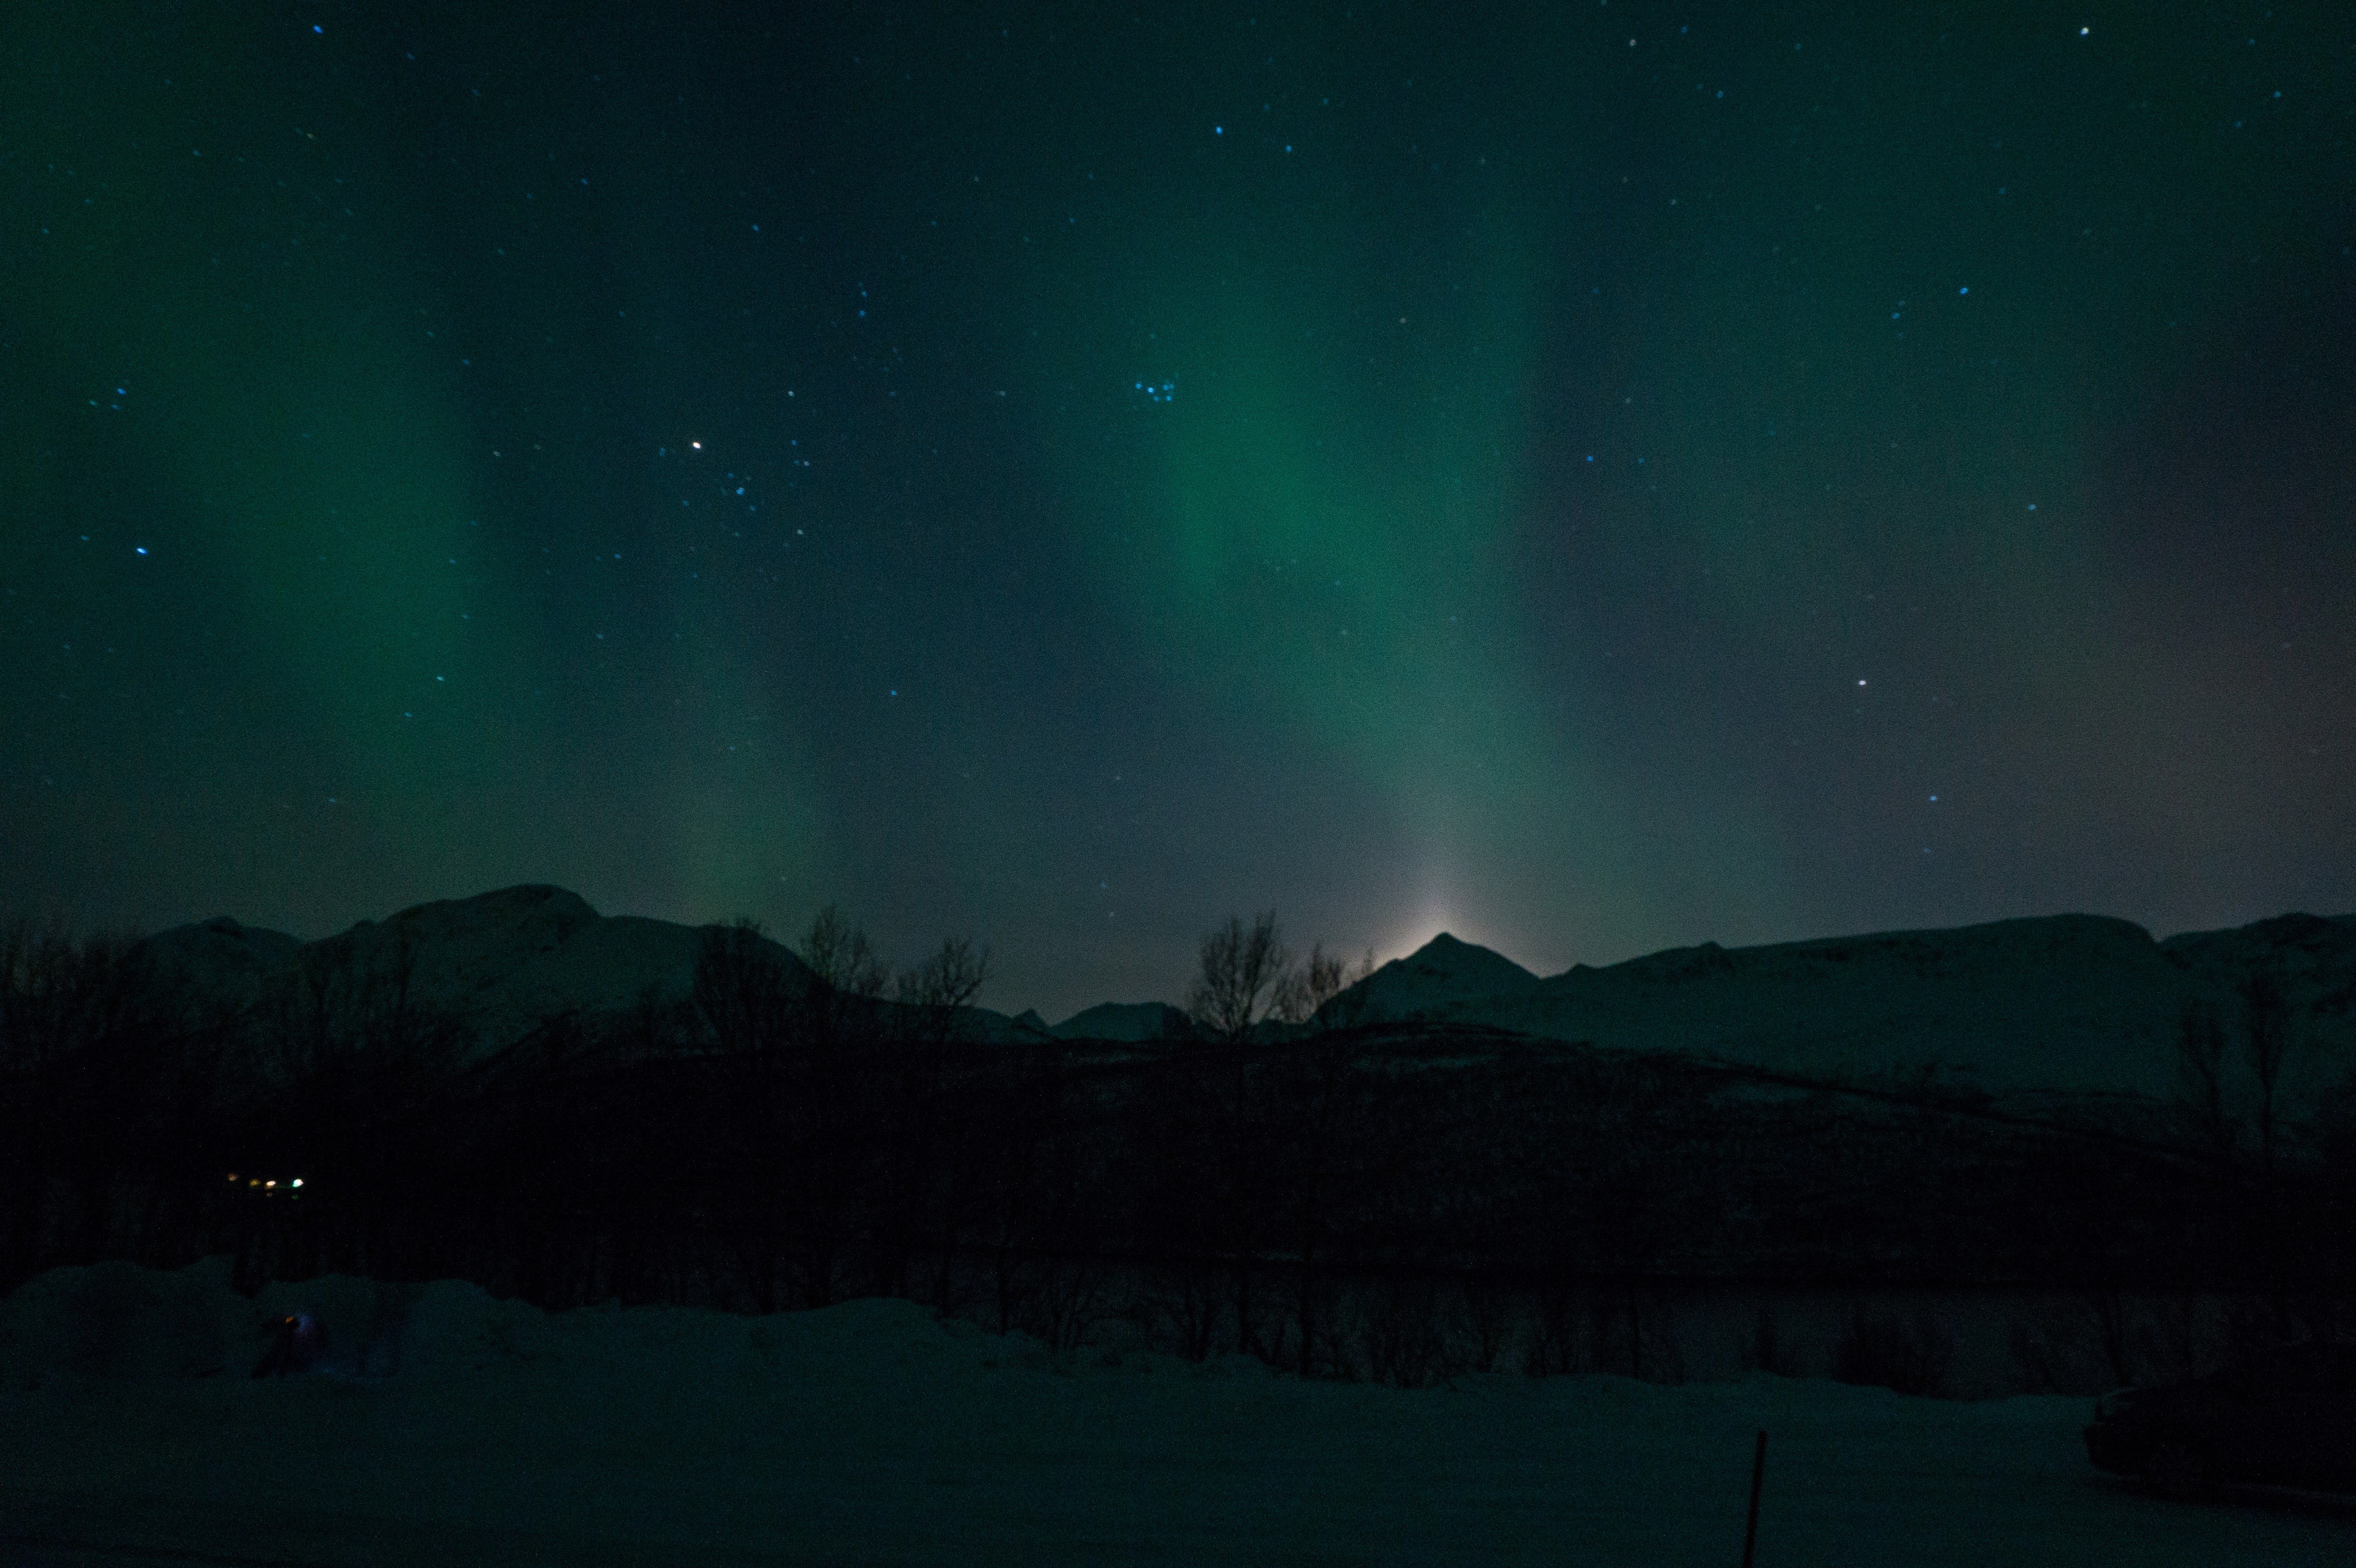 Northern Lights in Tromso